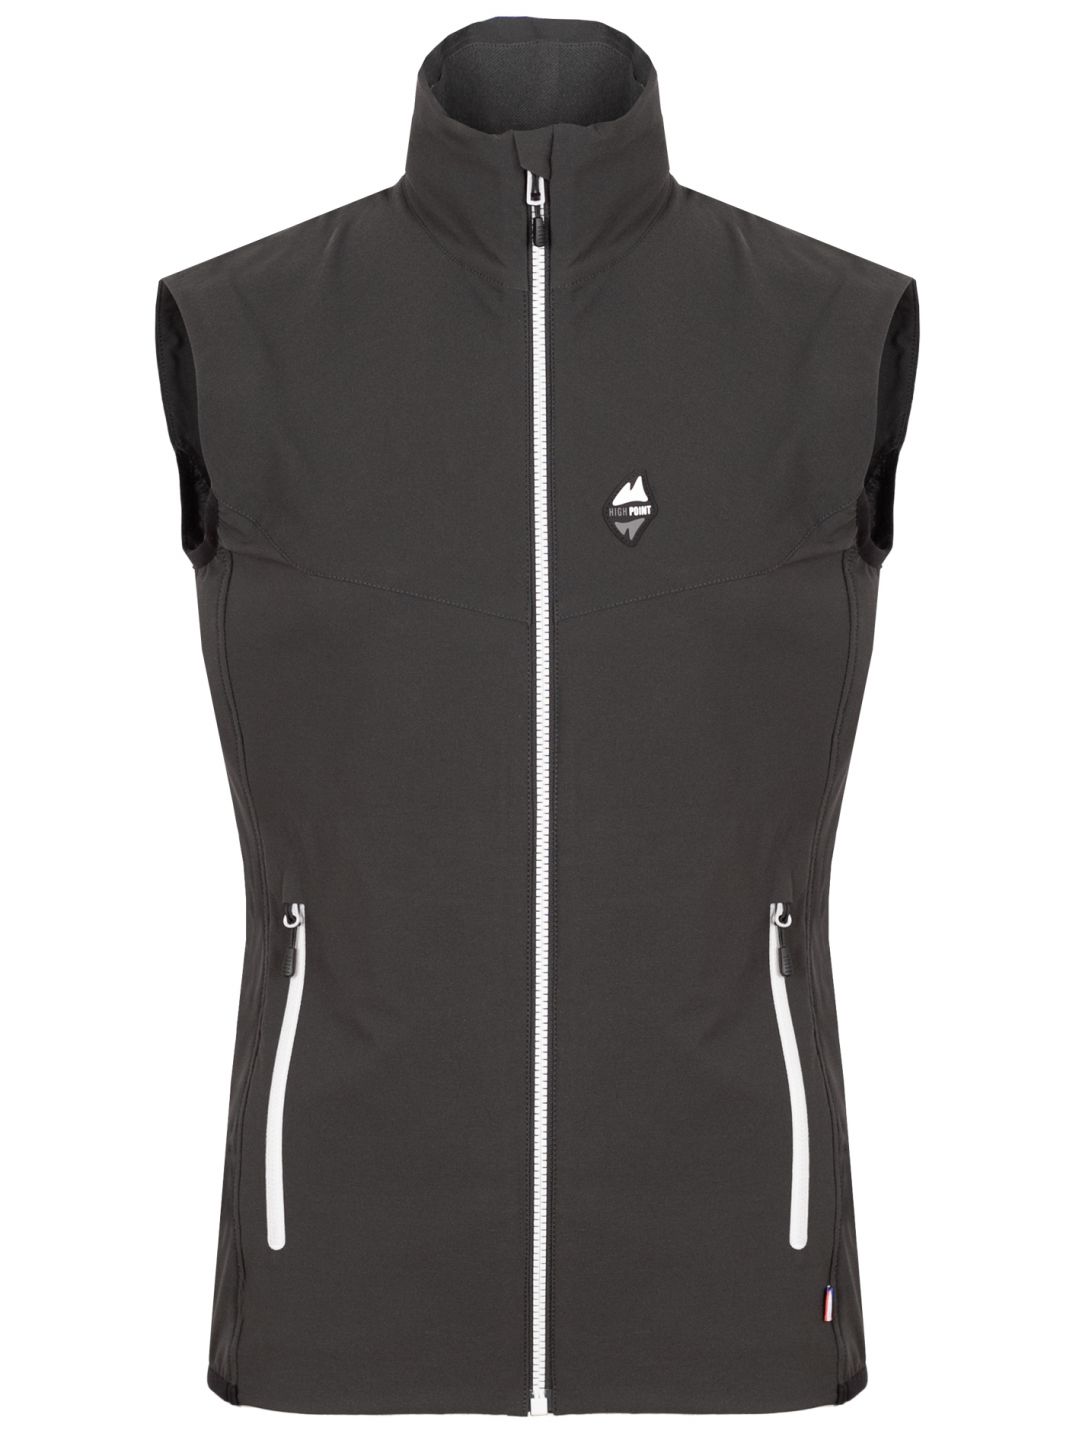 HIGH POINT Atom Lady Vest Black varianta: M